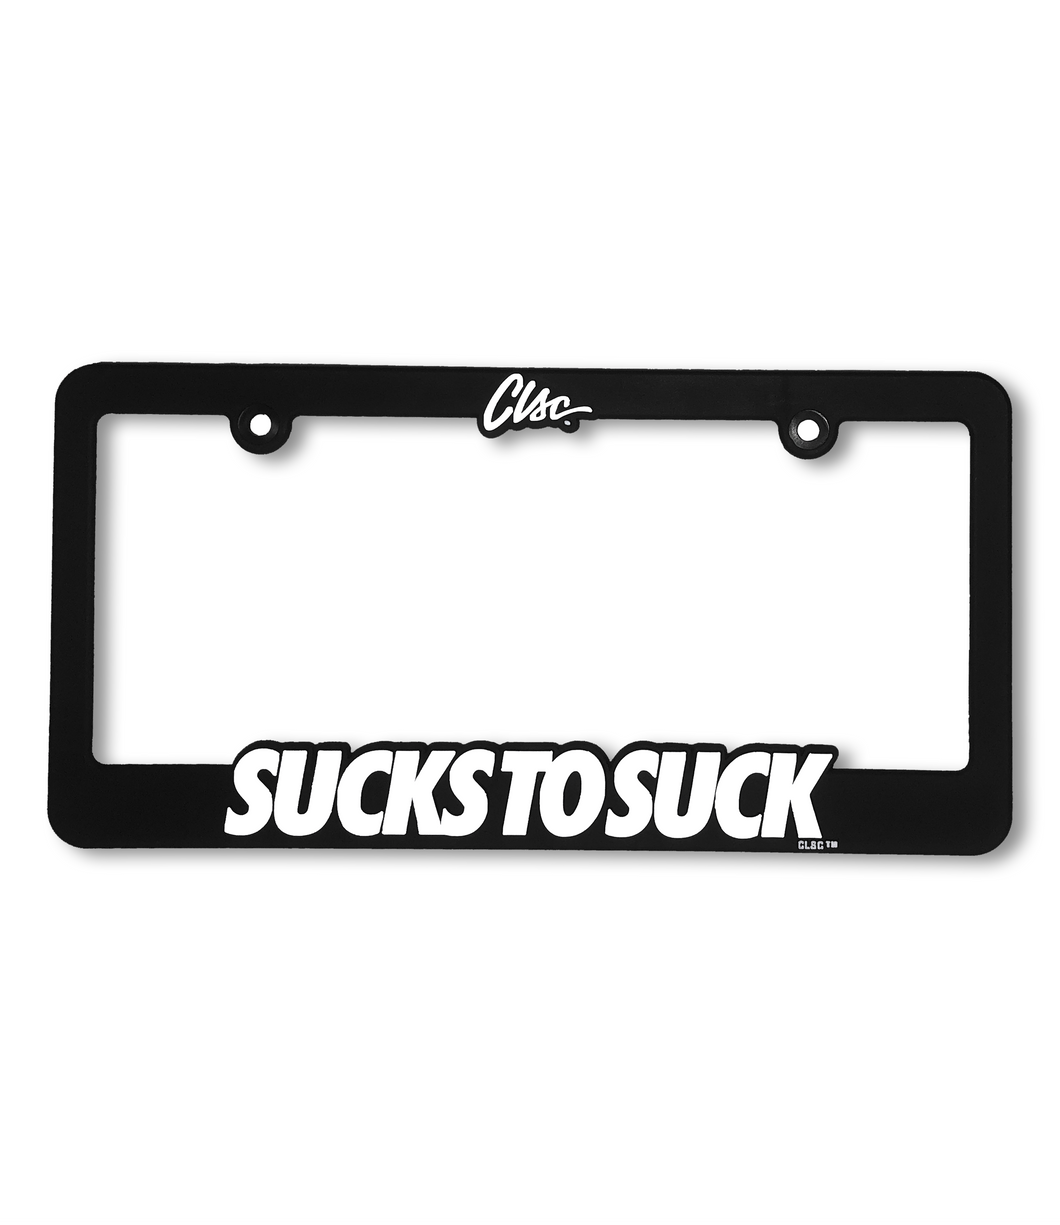 CLSC Sucks to Suck License Plate Frame